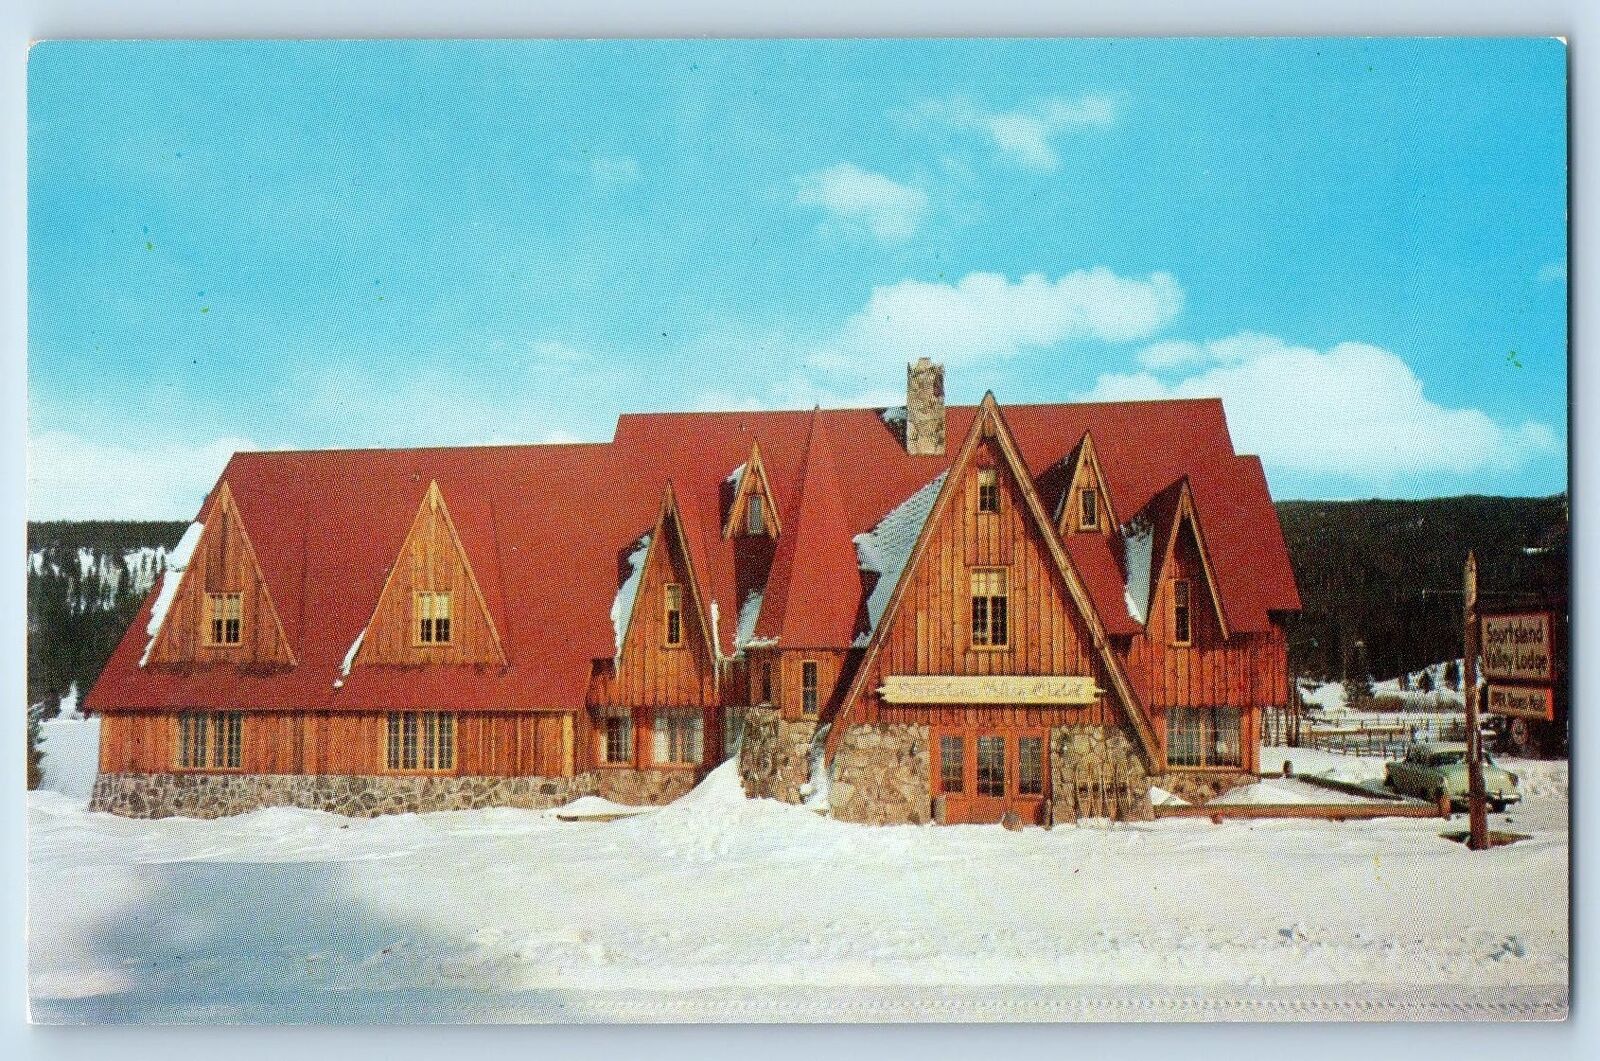 Winter Park Colorado CO Postcard Sportsland Ski Chalet Sleigh Rides c1960\'s Snow